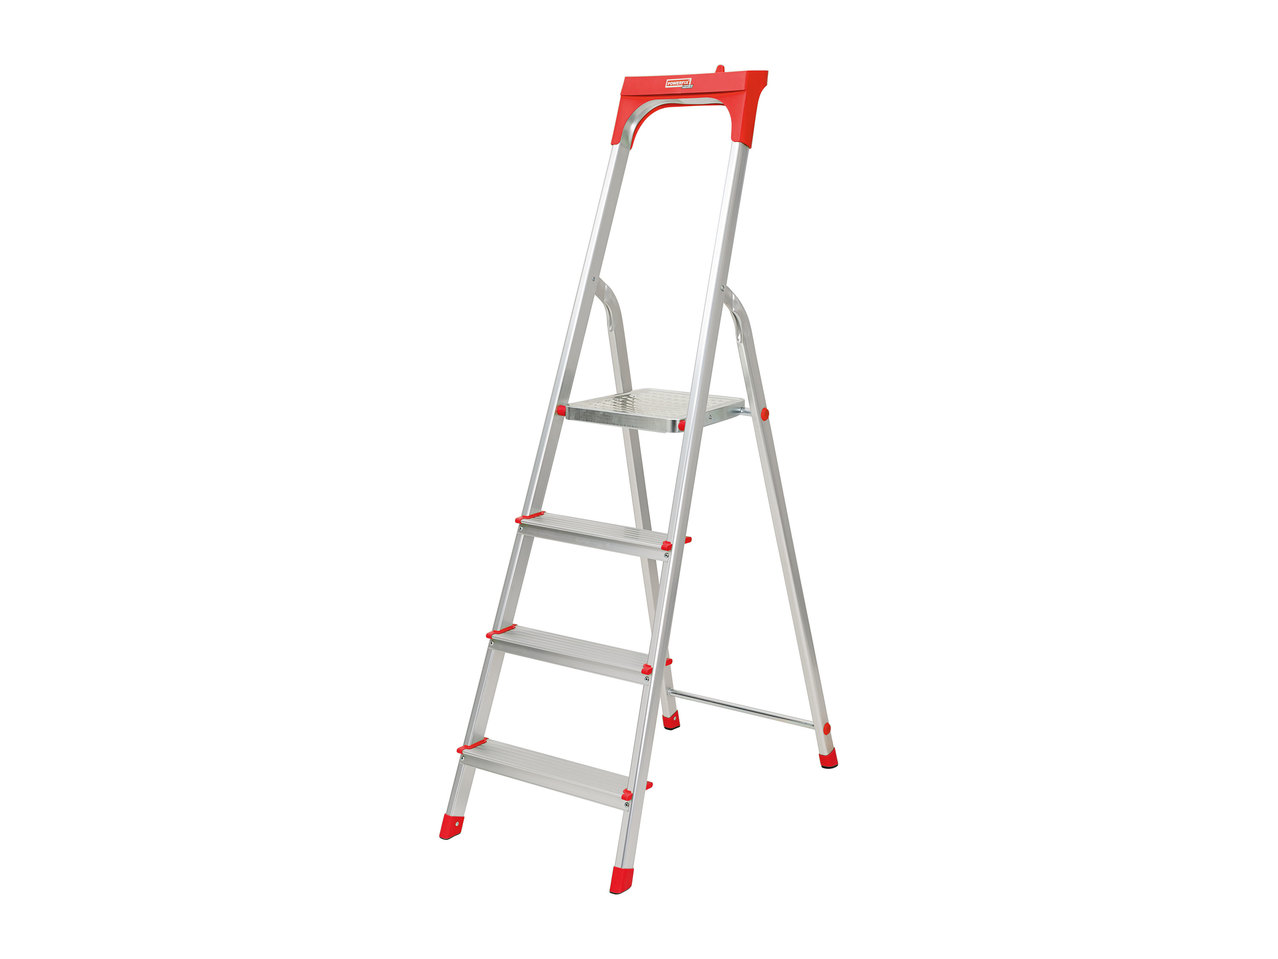 Powerfix Profi Aluminium Household Step Ladder1